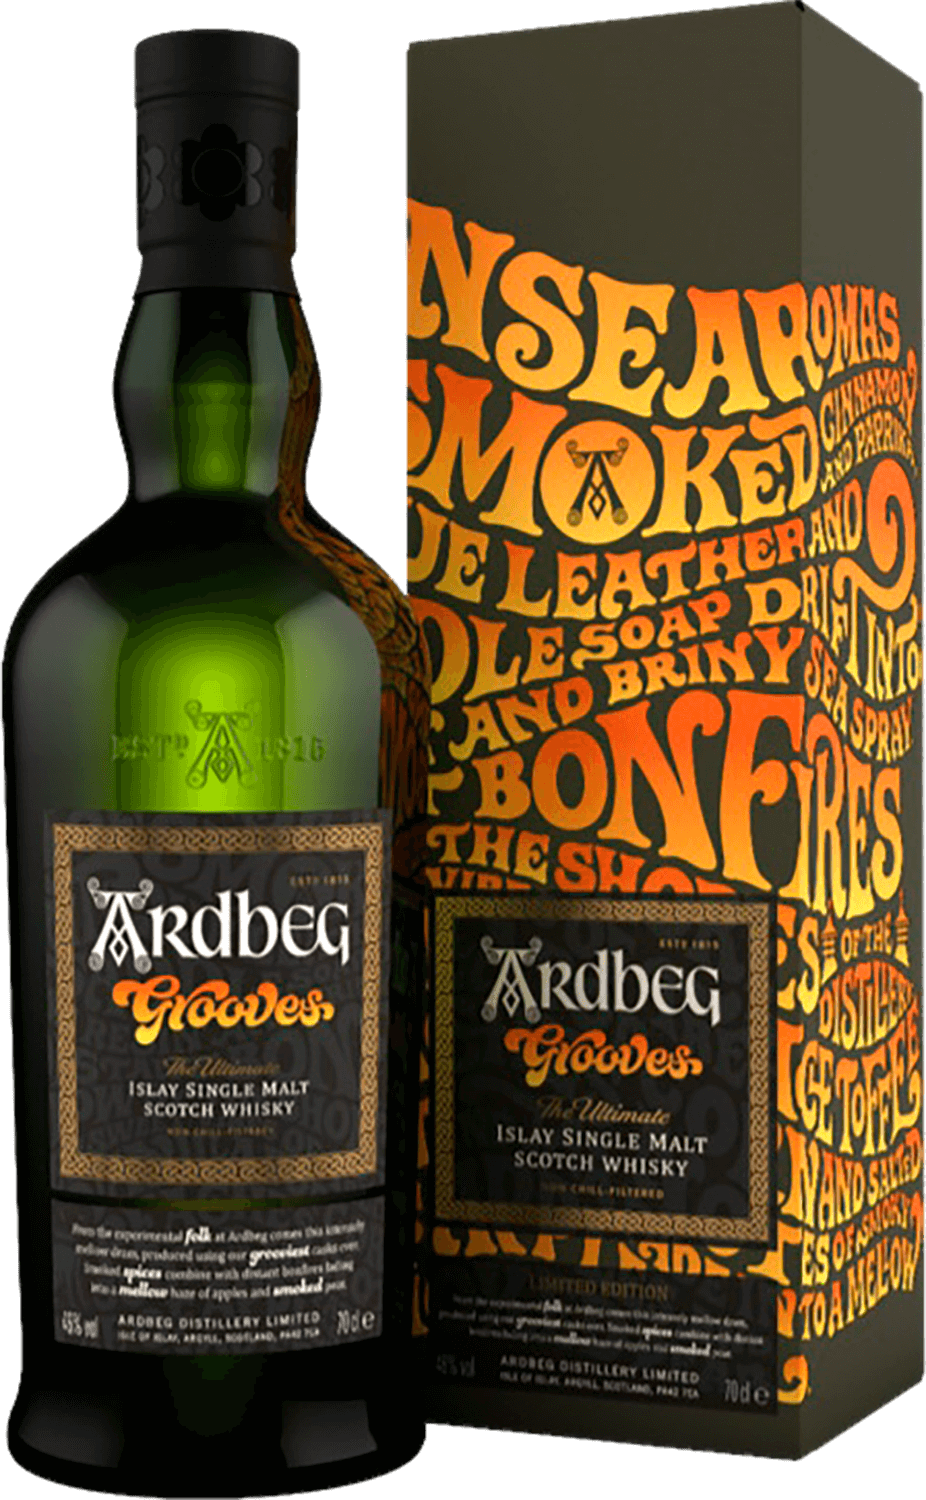 Ardbeg Grooves Islay Single Malt Scotch Whisky (gift box) bruichladdich islay barley single malt scotch whisky gift box